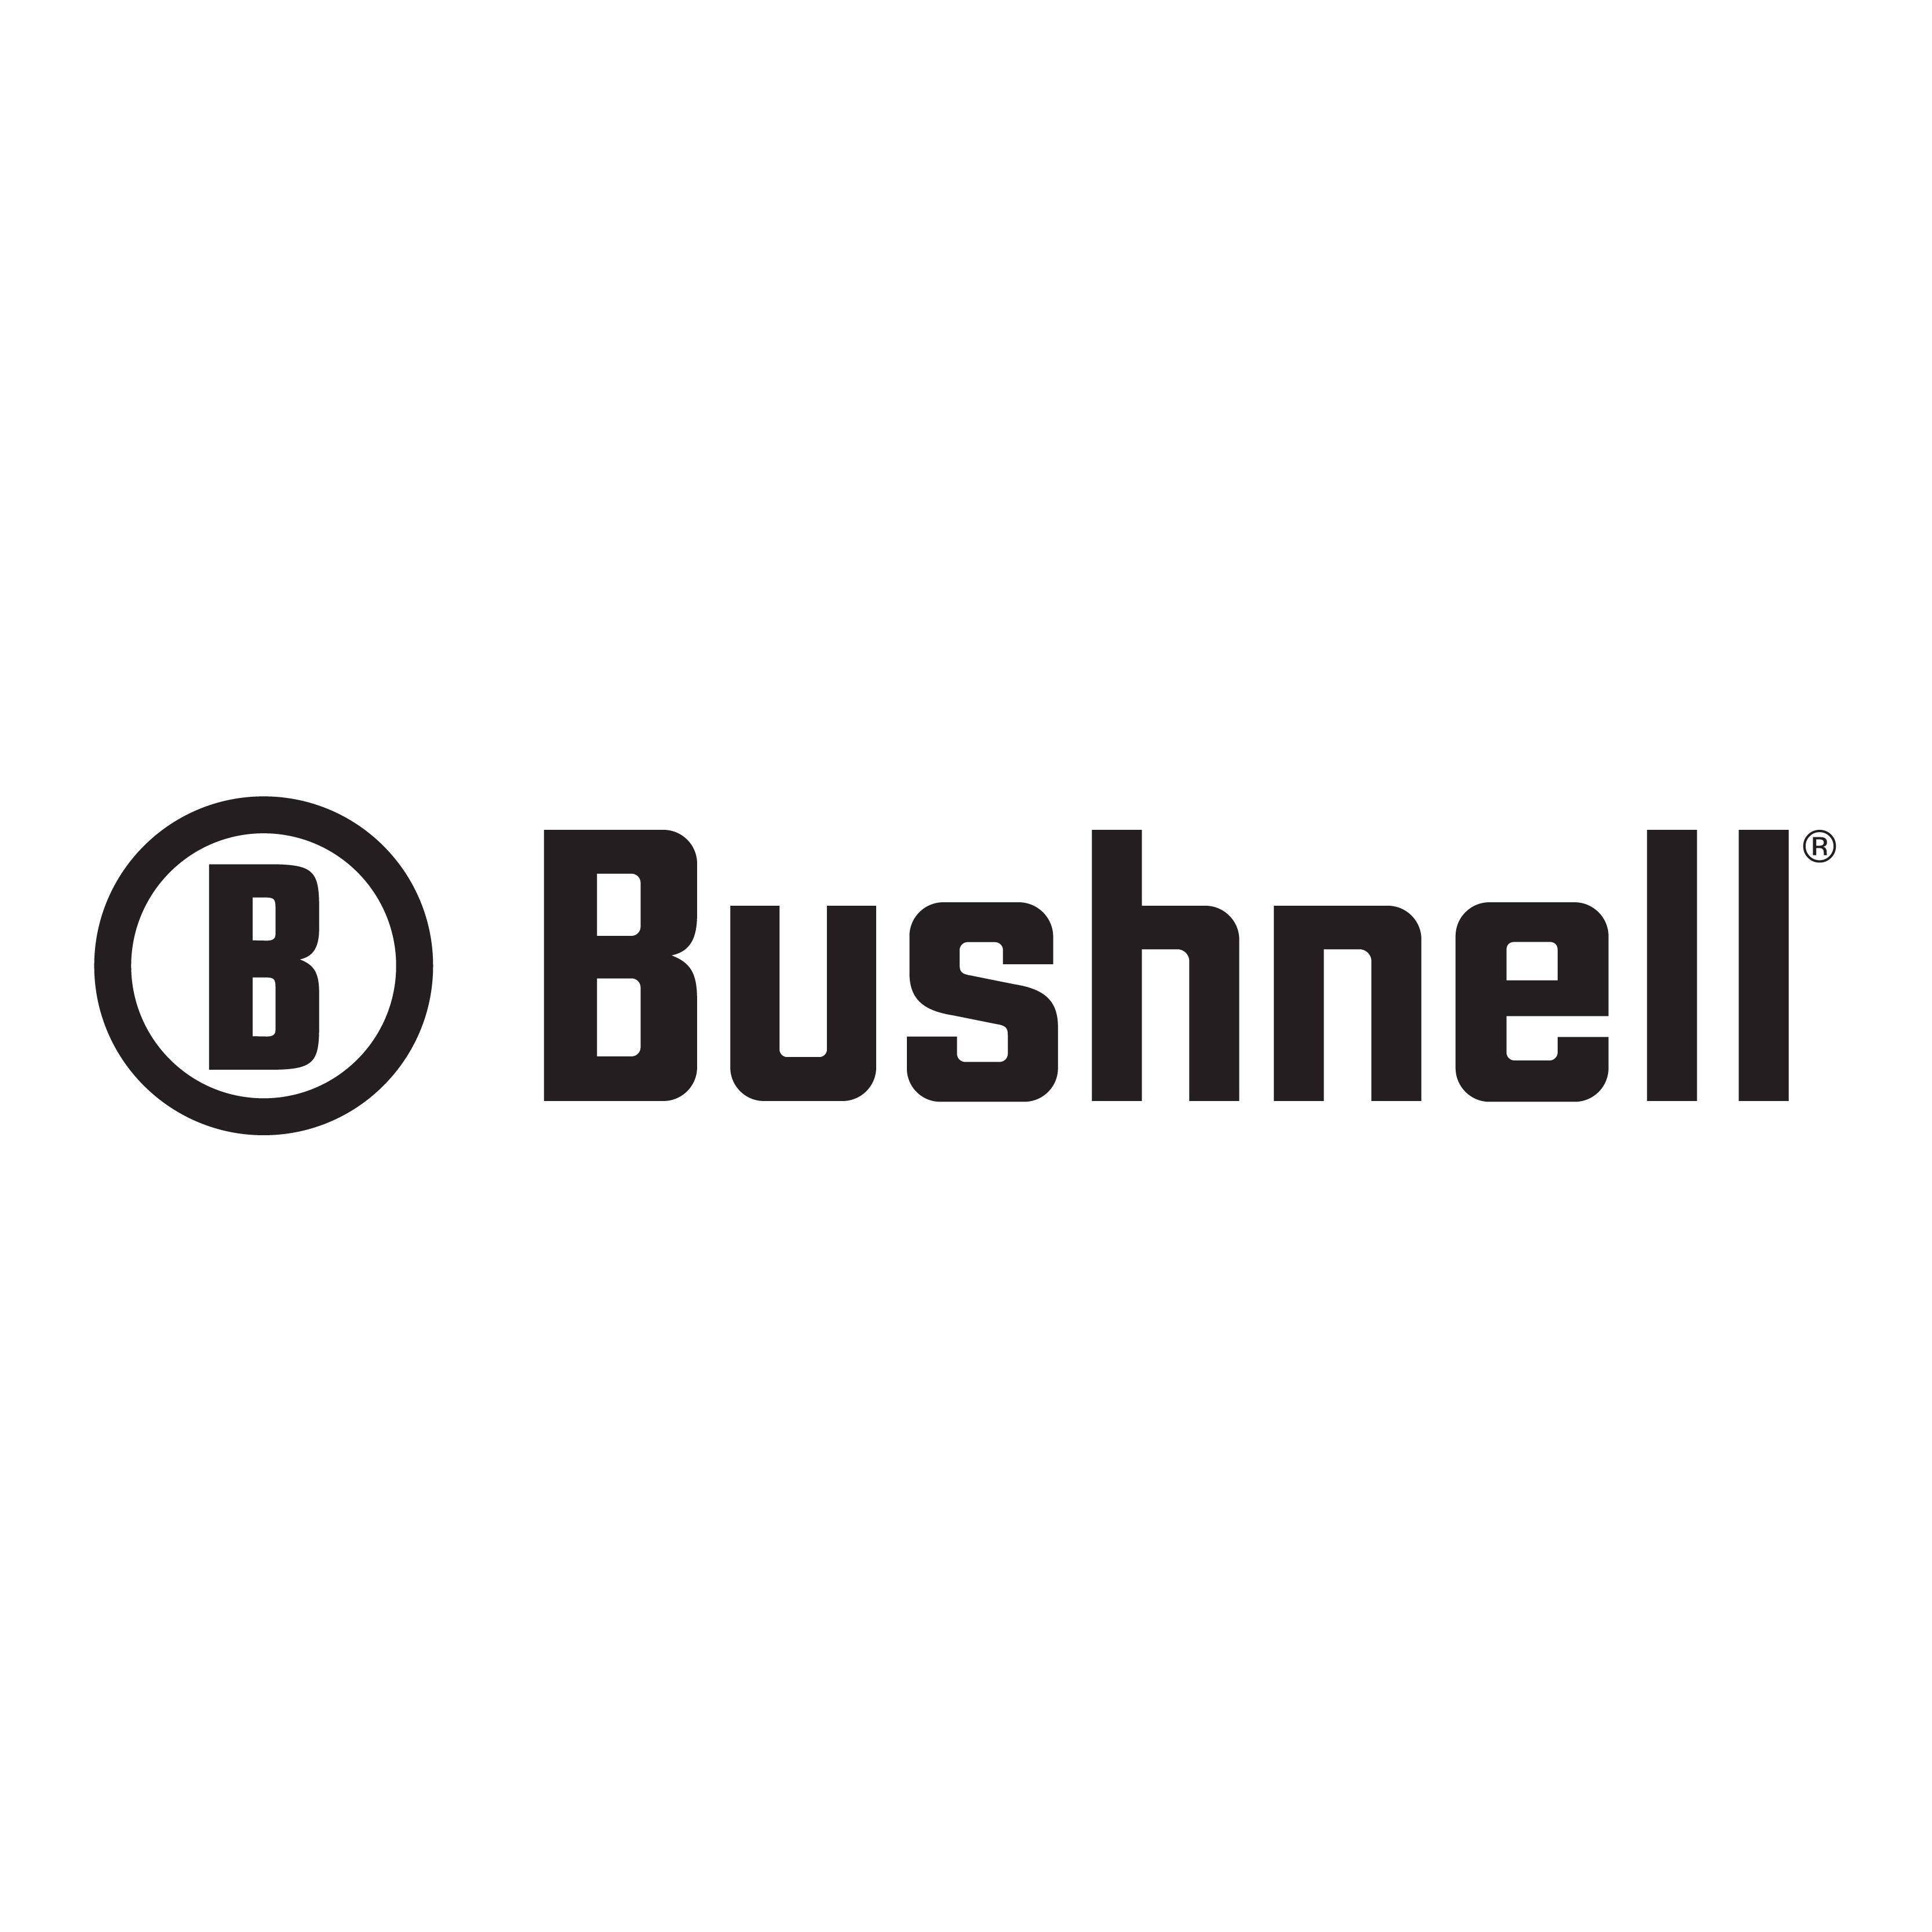 Bushnell Logo - Image result for bushnell logo | CTC | Logos